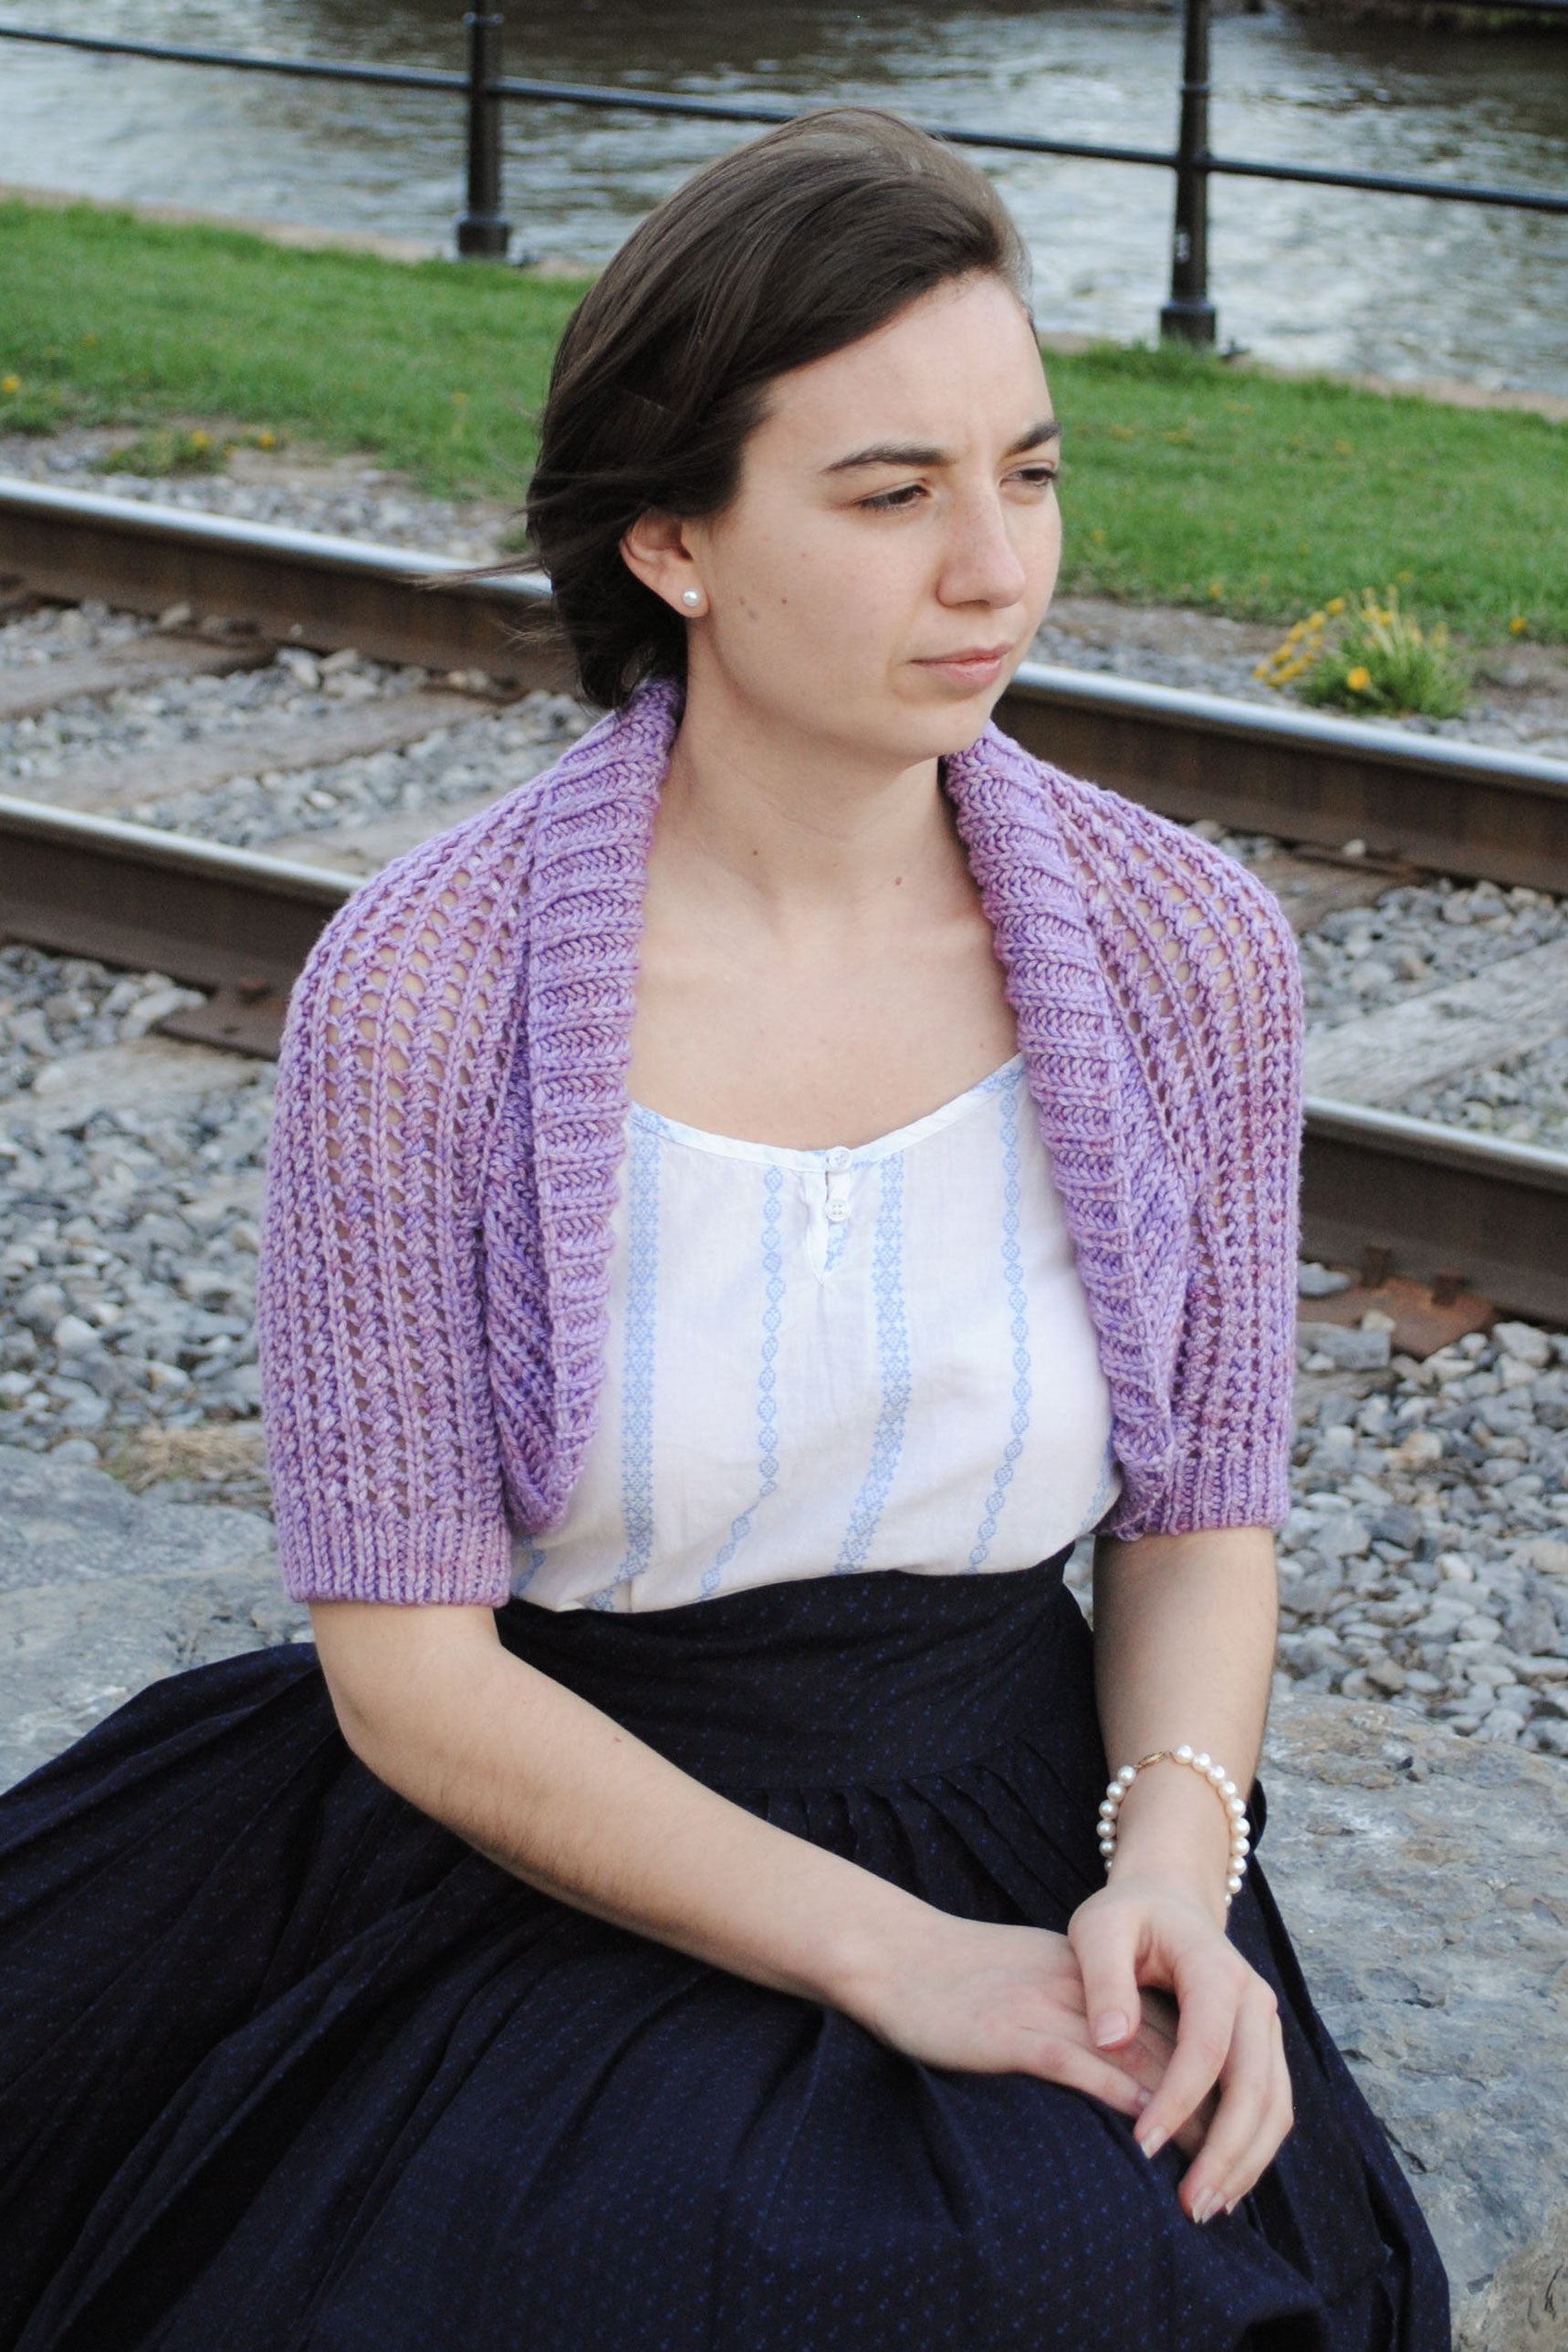 Vintage shrug knitting pattern with shawl collar